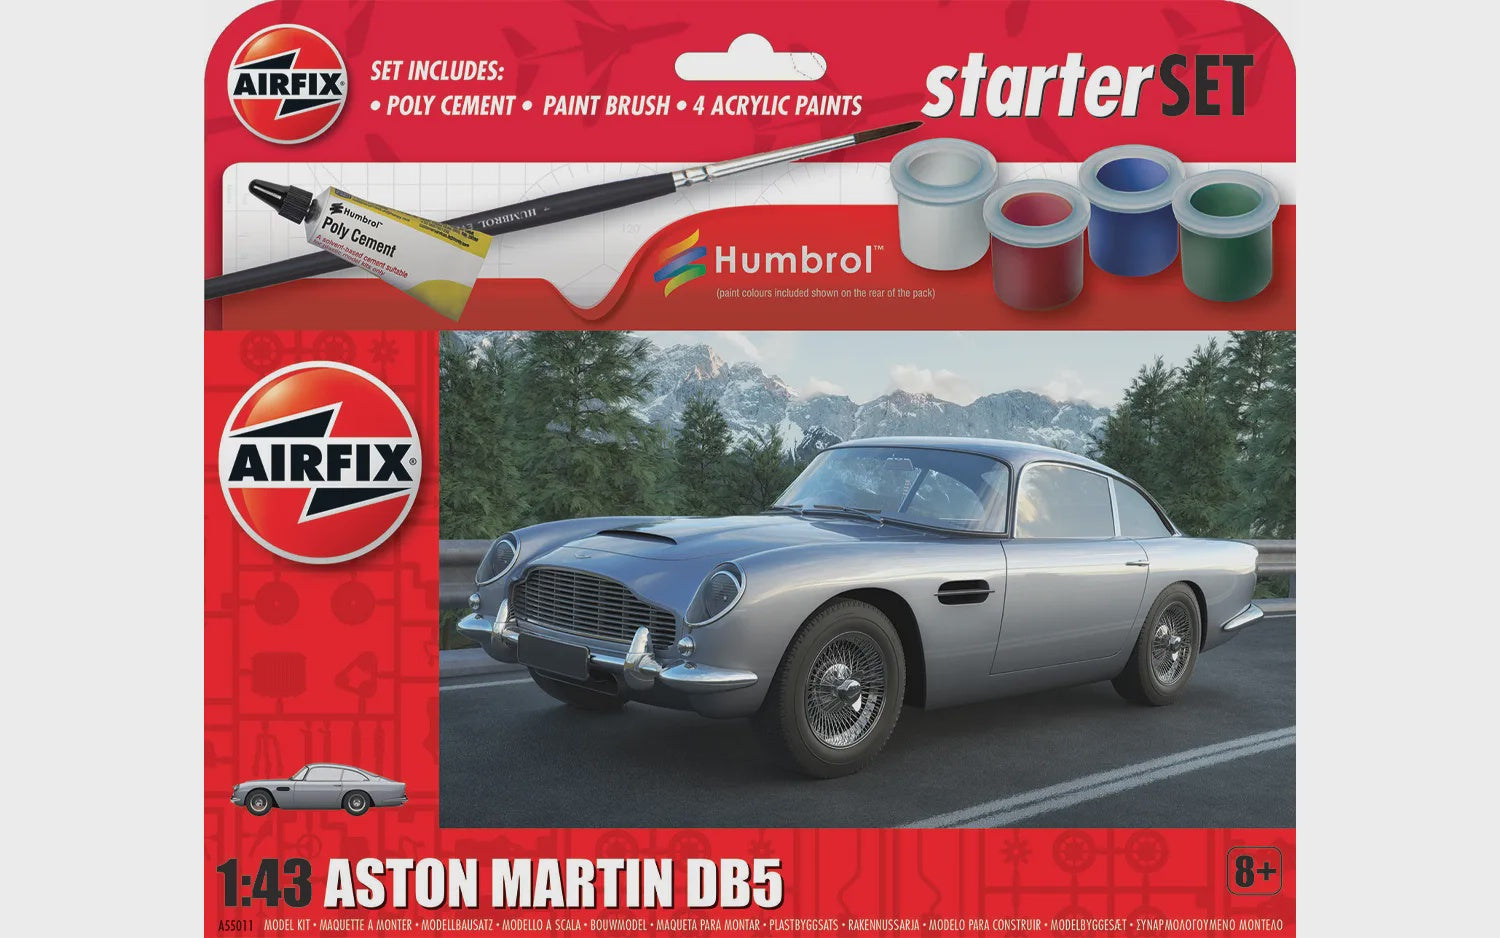 Aston Martin DB5 Starter Set 1/43 Model Car Kit #55011 by Airfix”